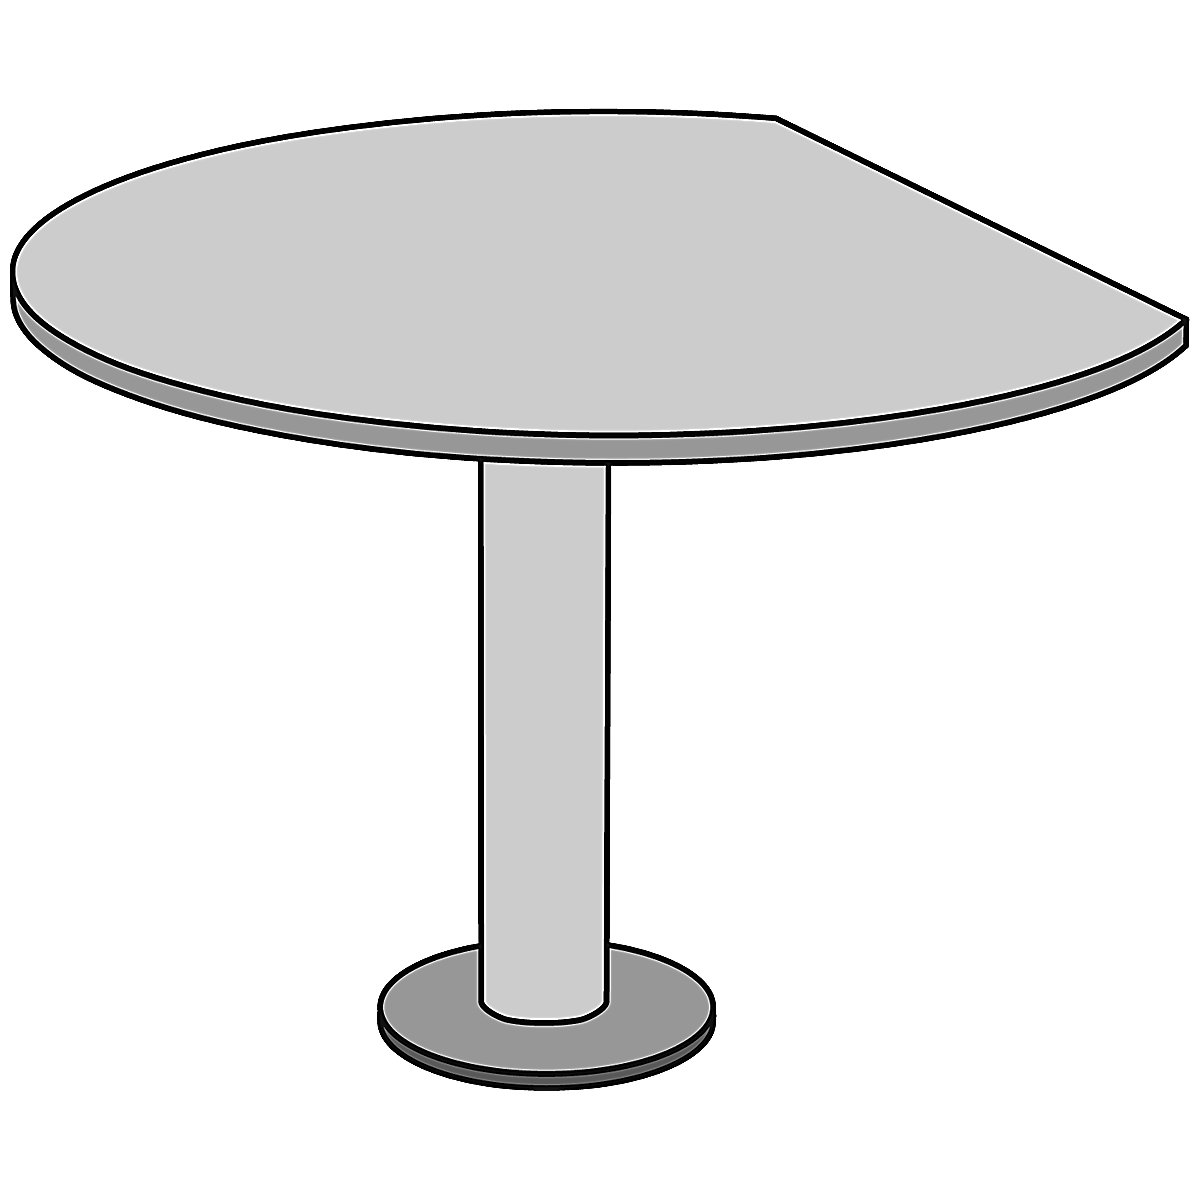 Table additionnel STATUS – eurokraft pro